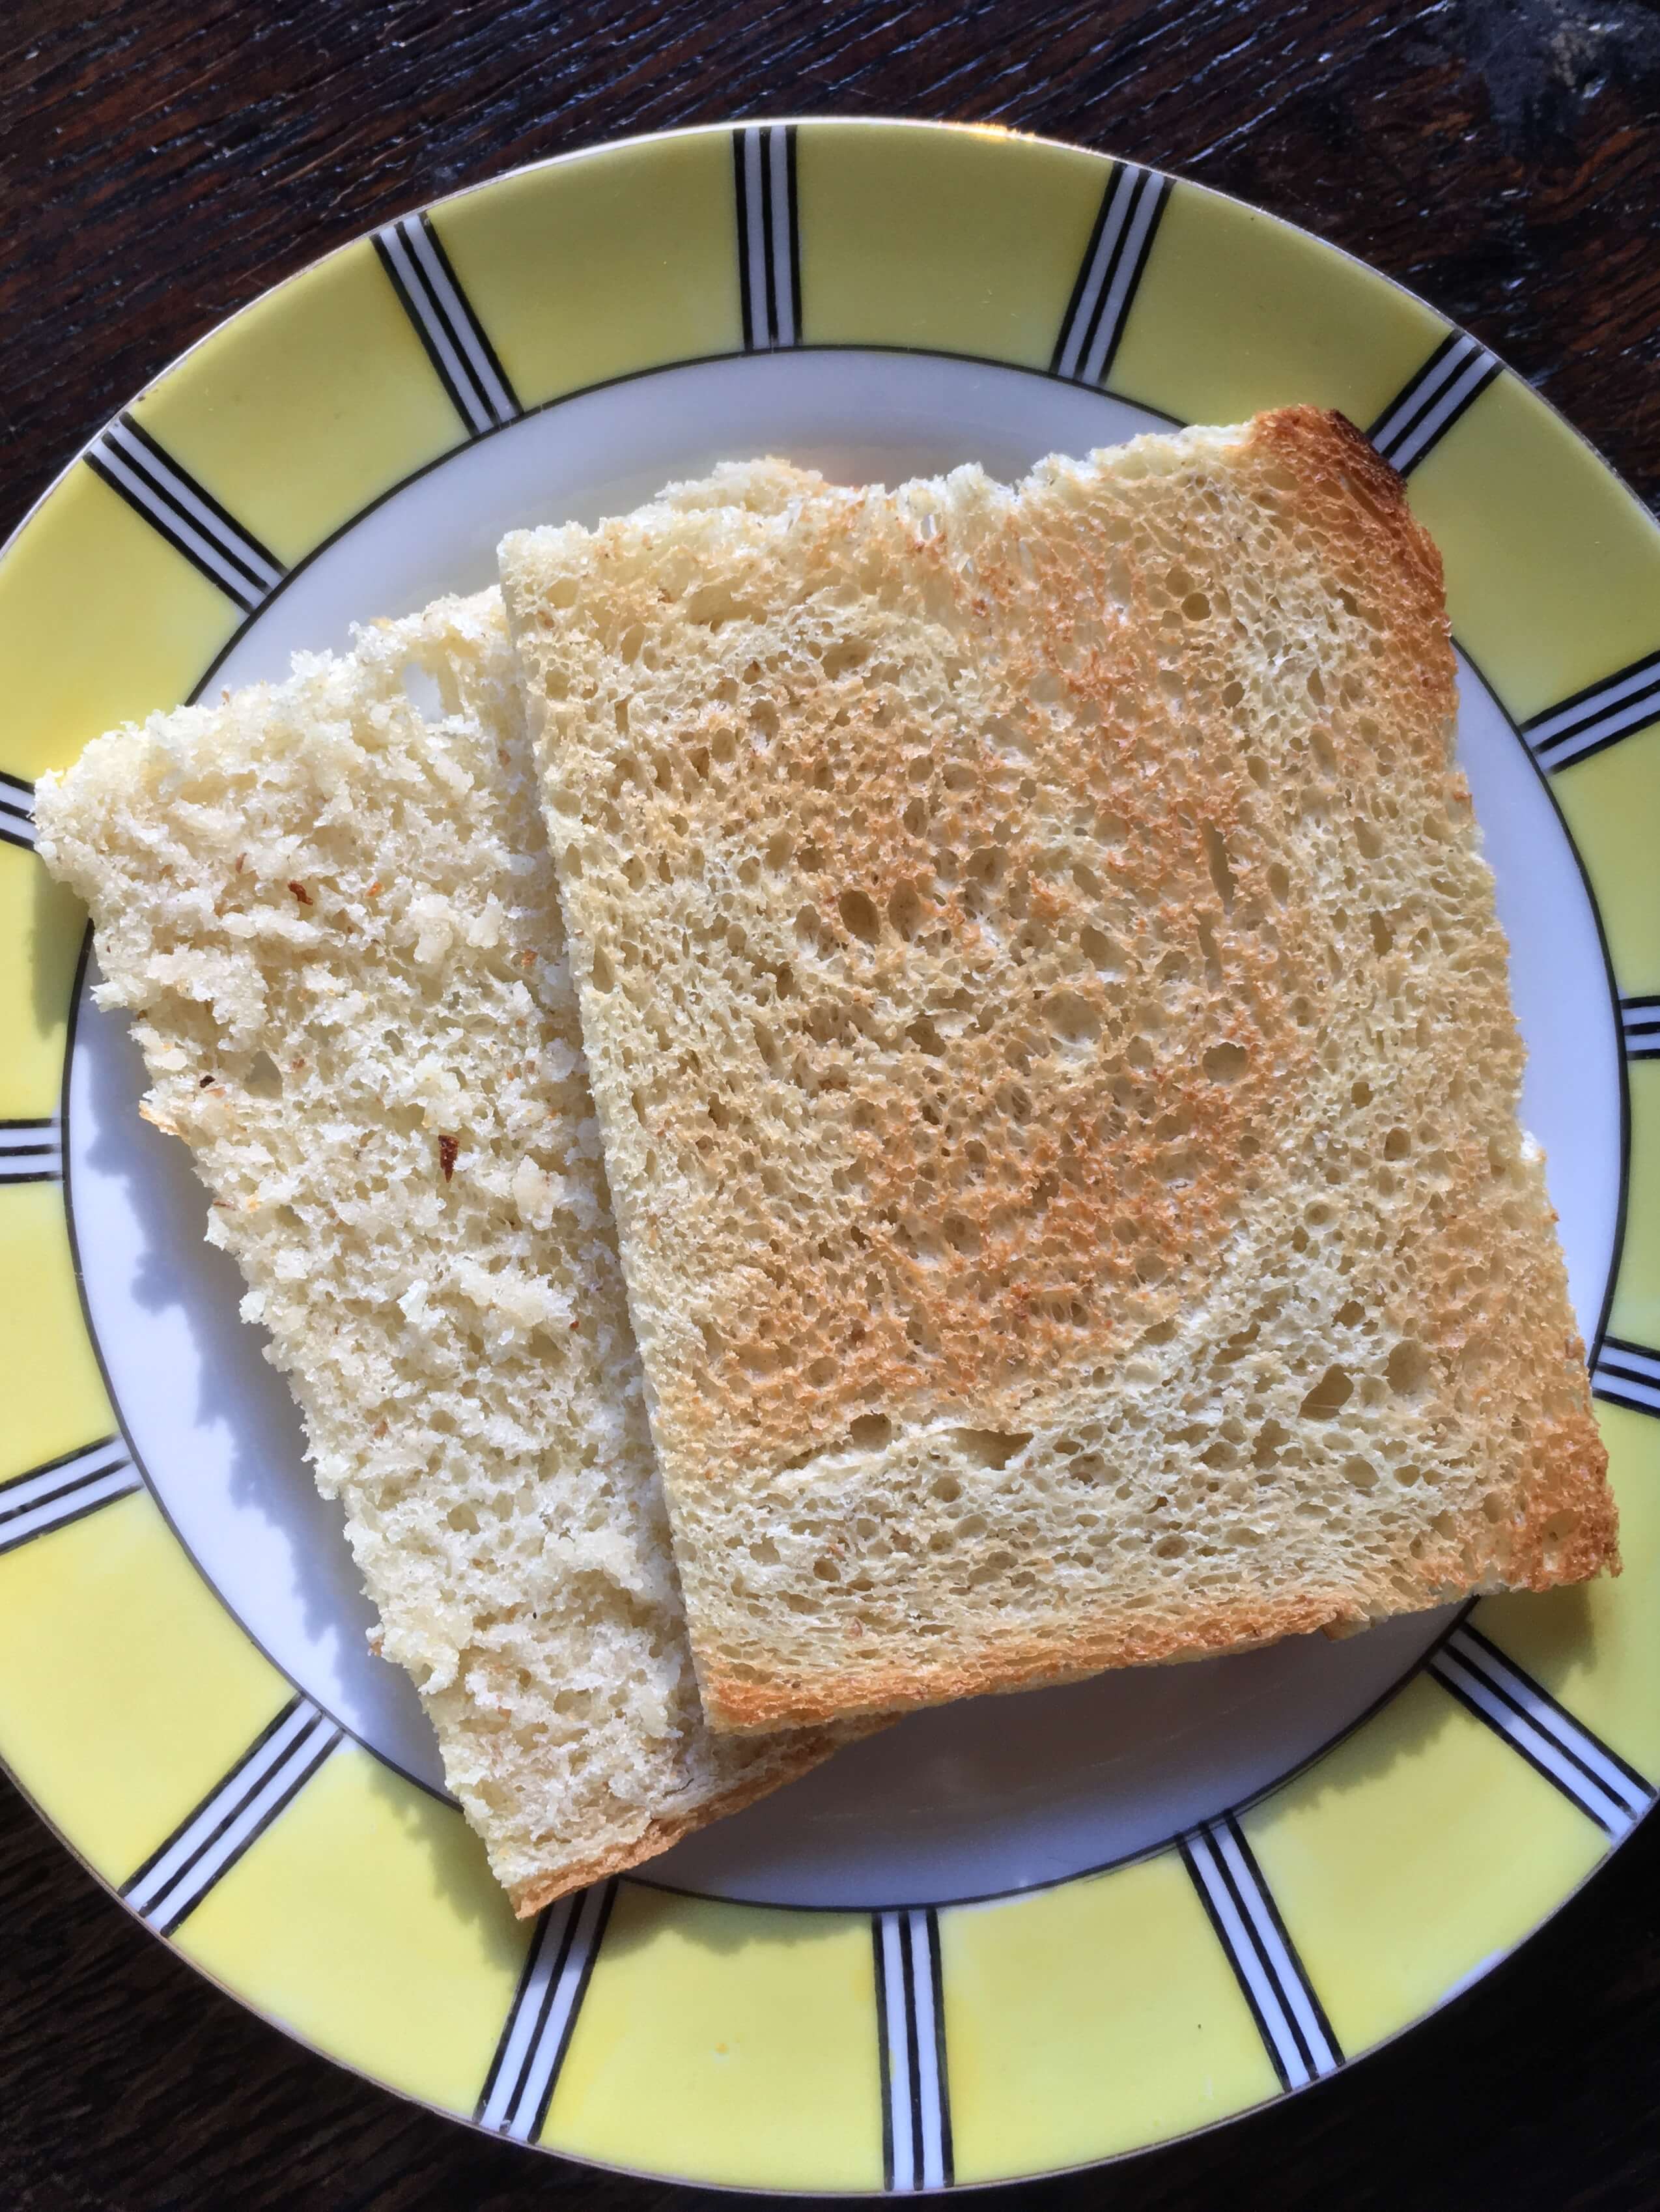 https://priscillamartel.com/wp-content/uploads/2016/10/Homemade-Melba-toast-sliced.jpg